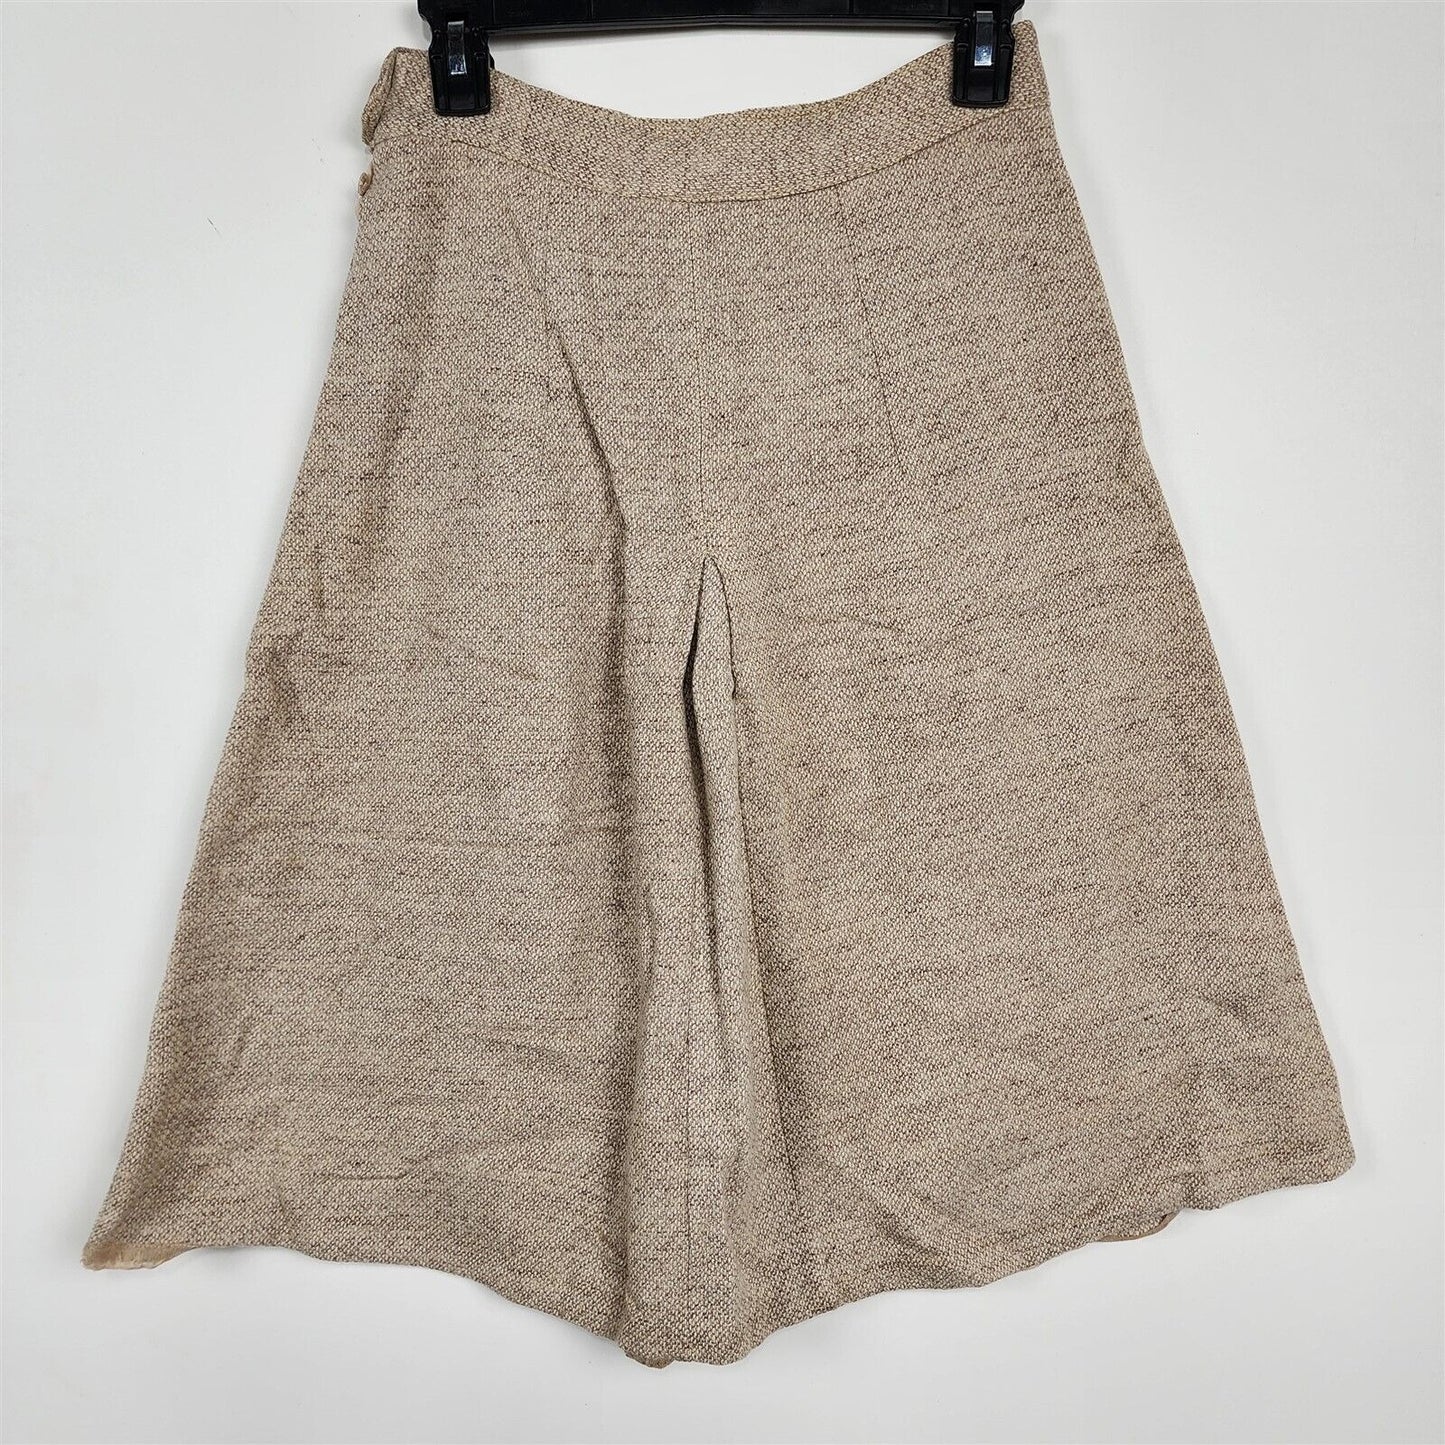 Vintage 1950s-60s Beige Wool Skirt Suit Set Womens Size S